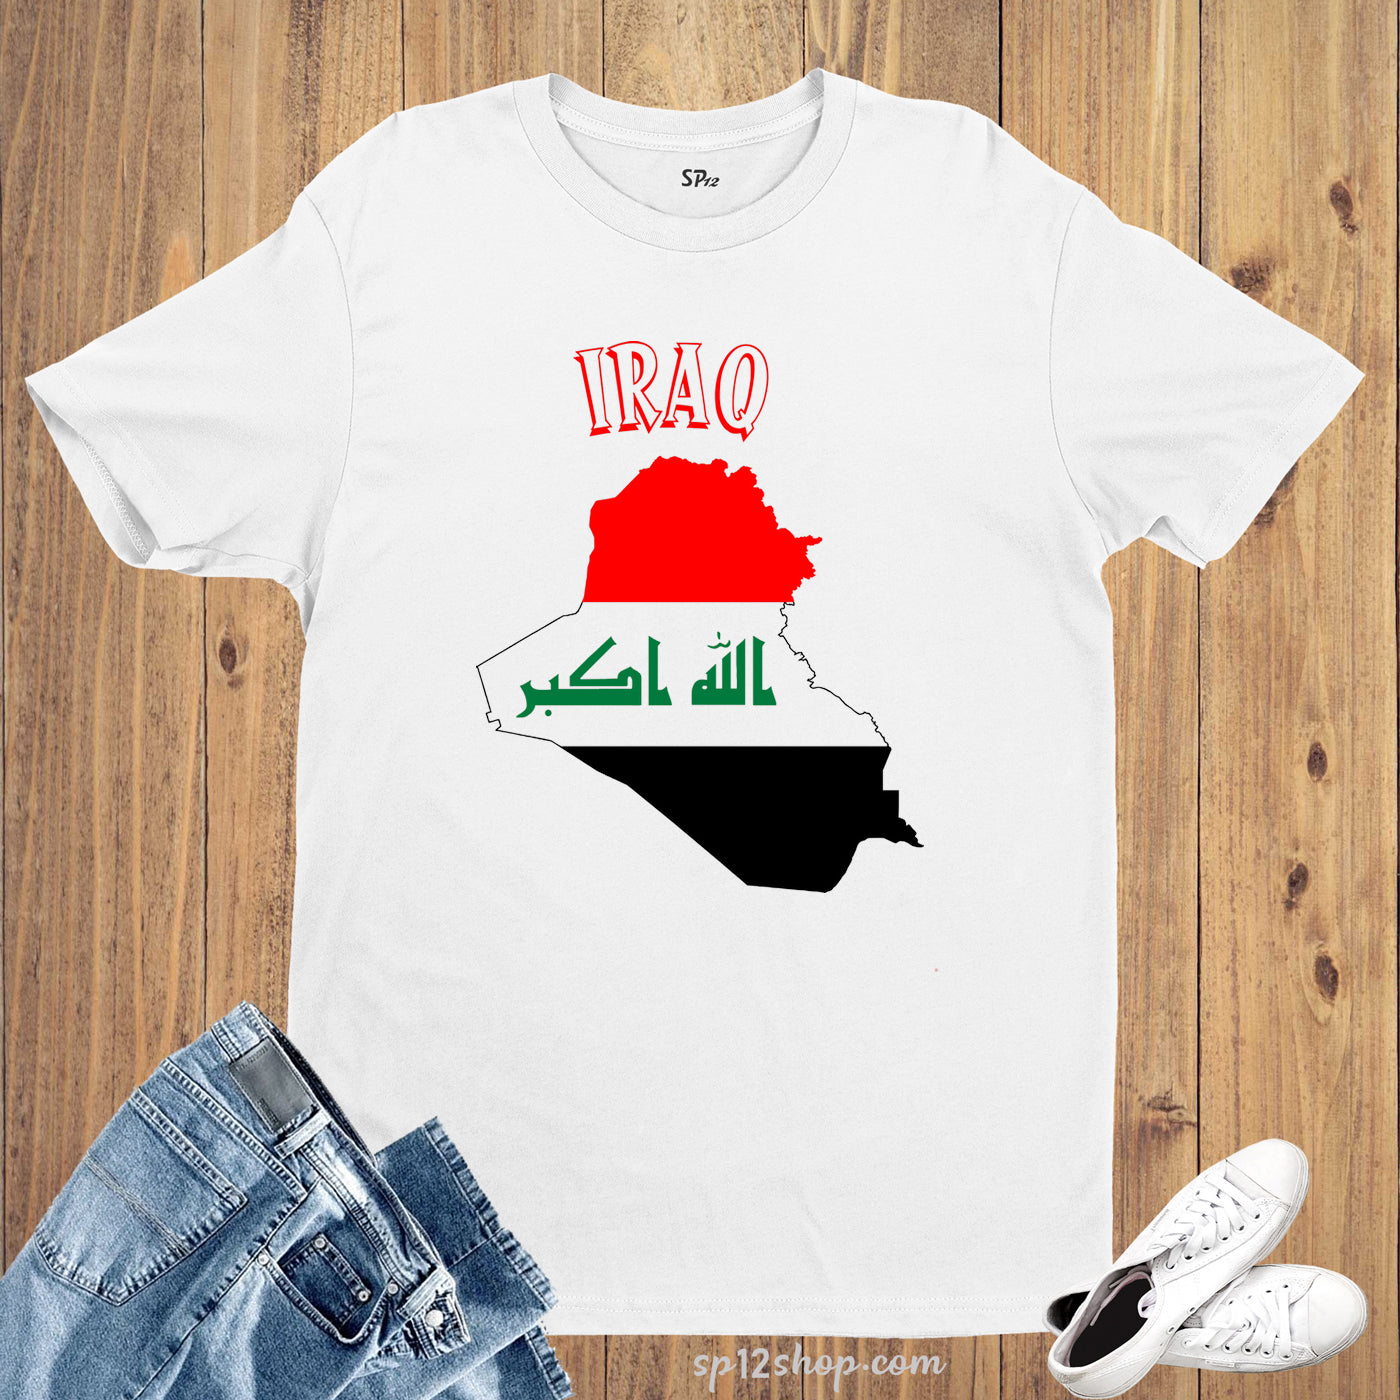 Iraq Flag T Shirt Olympics FIFA World Cup Country Flag Tee Shirt